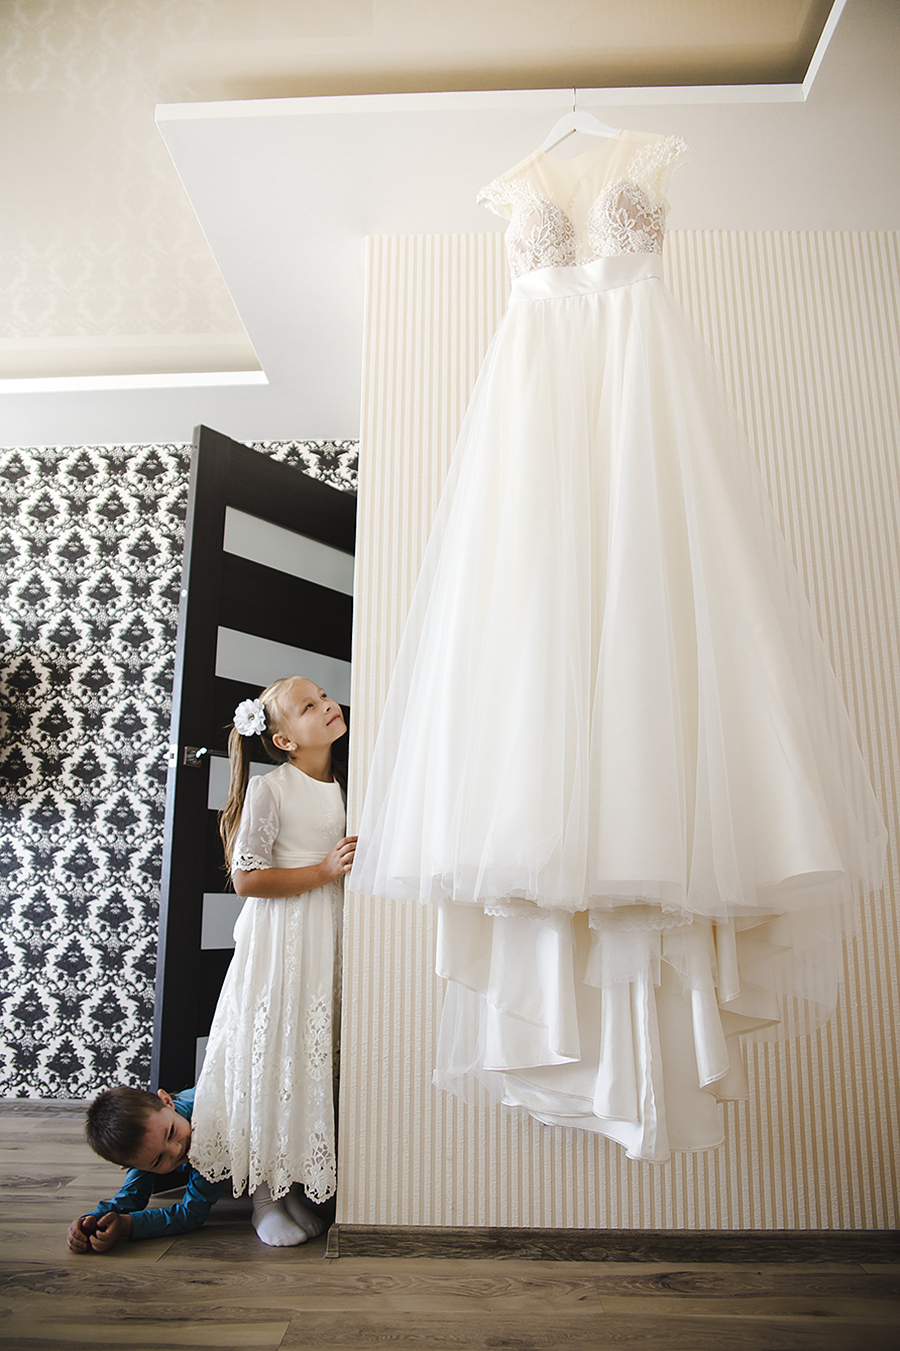 Платье мечты | Фотограф Мария Кошелева | foto.by фото.бай